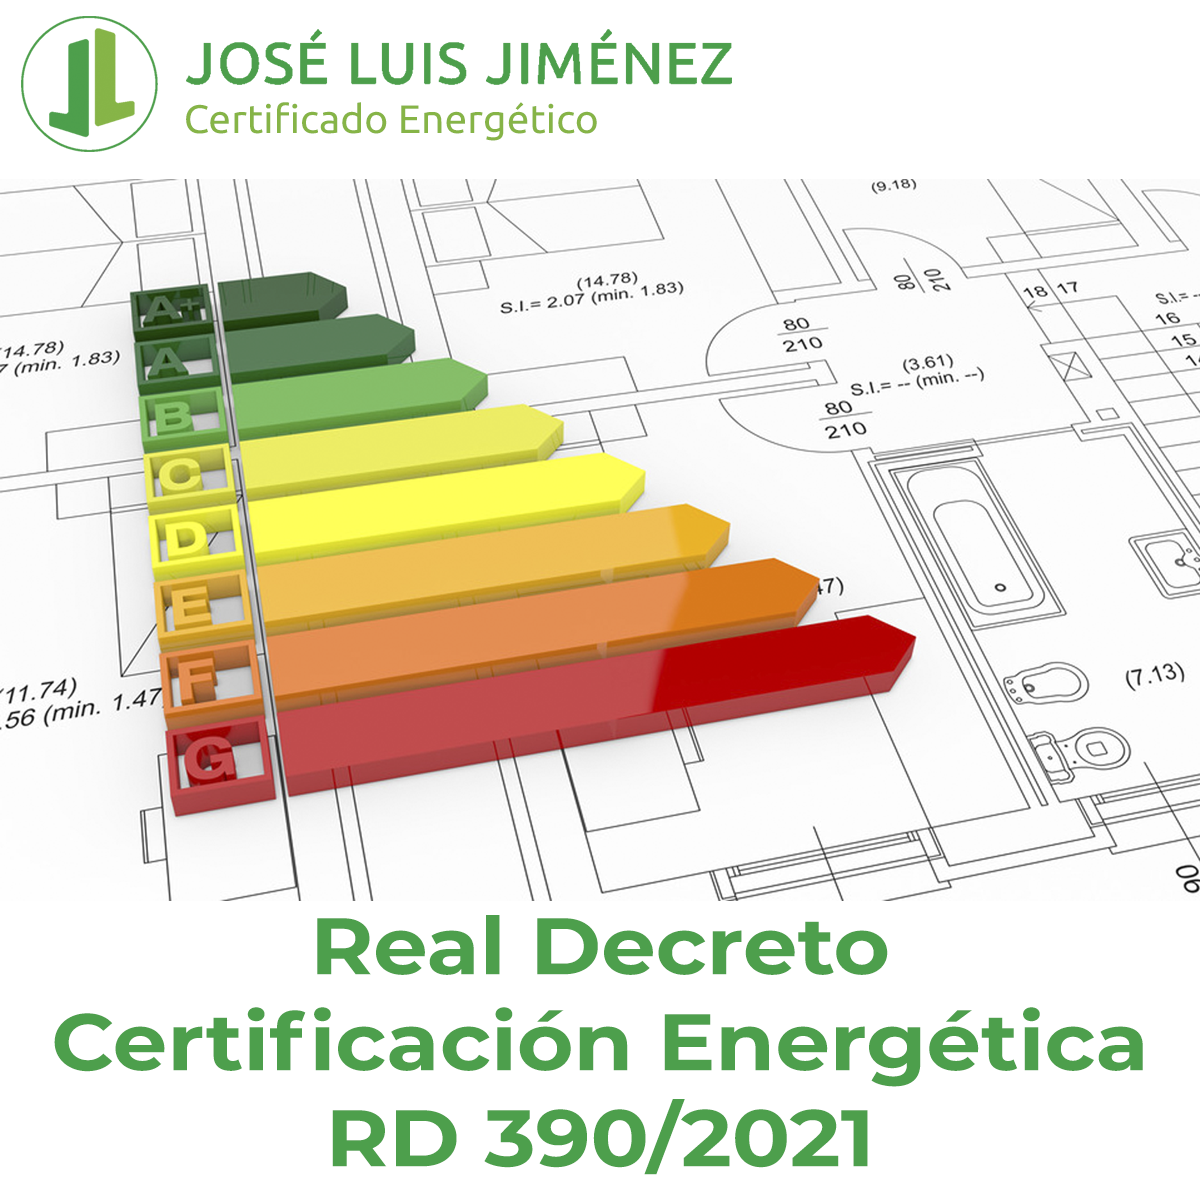 José Luis Jiménez. Certificado Energético